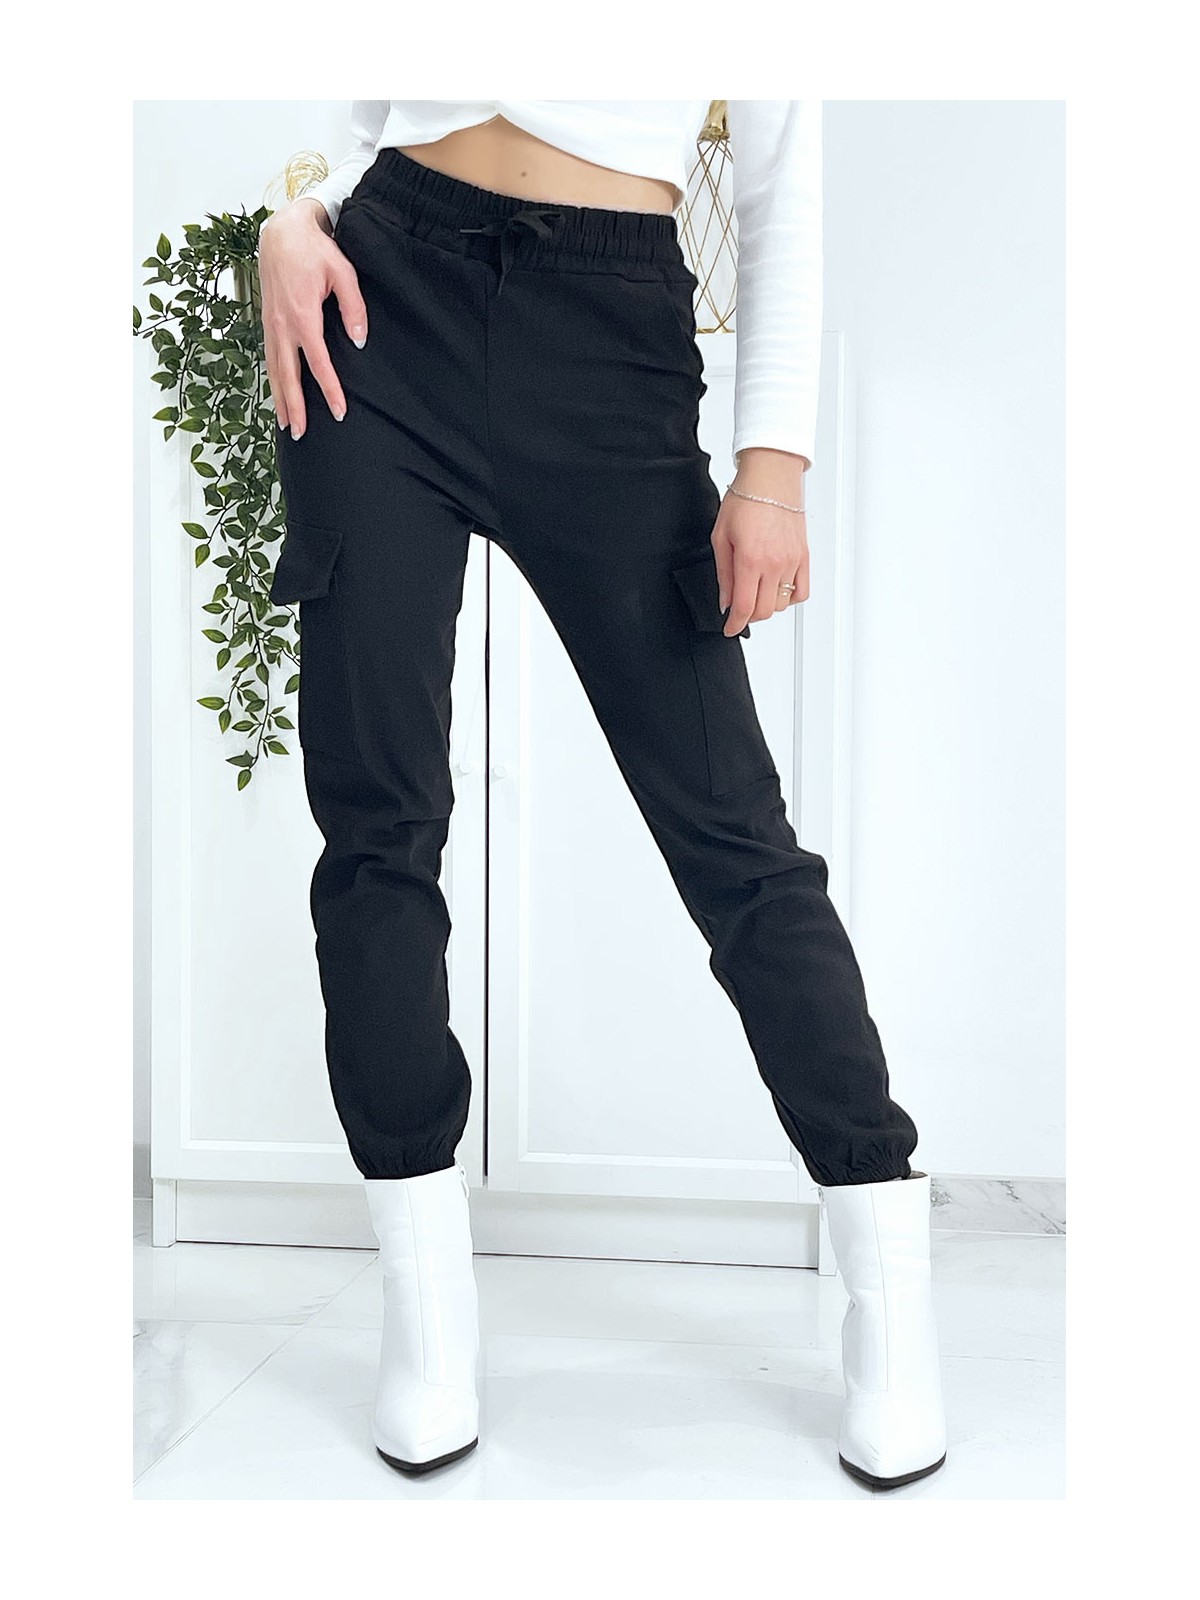 Pantalon treillis noir en strech avec poches - 6